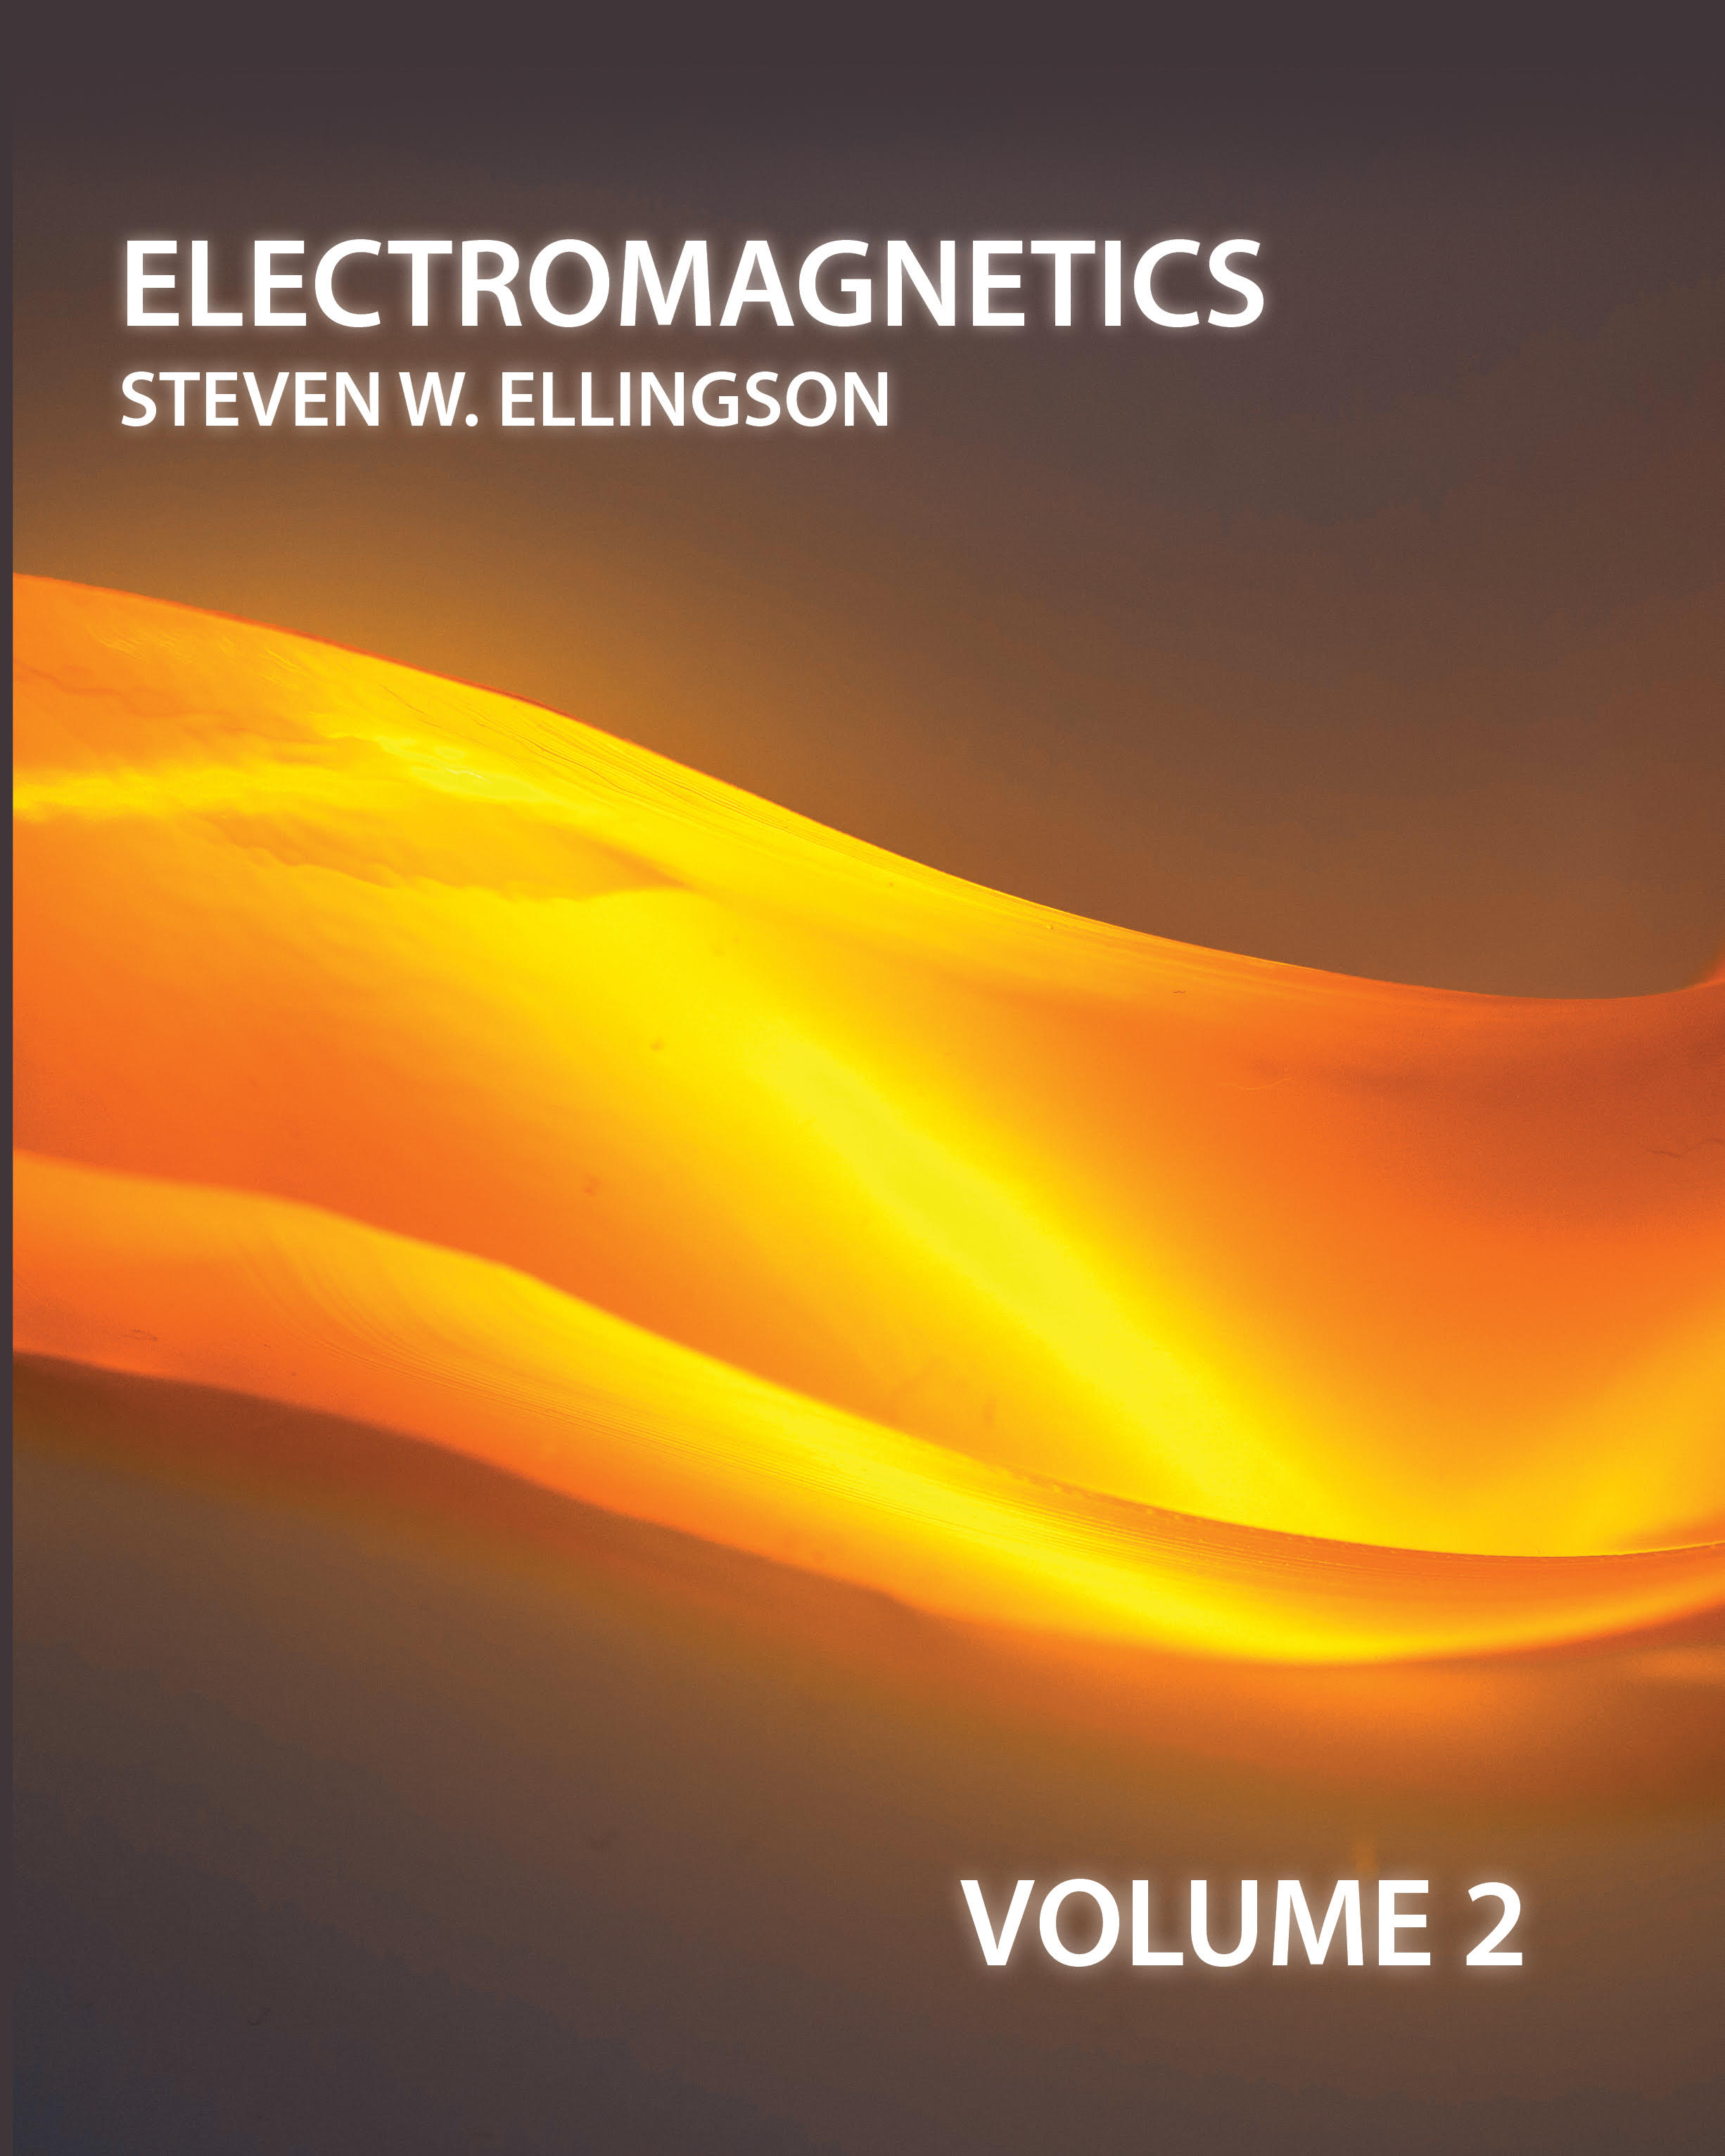 Read more about Electromagnetics Vol 2